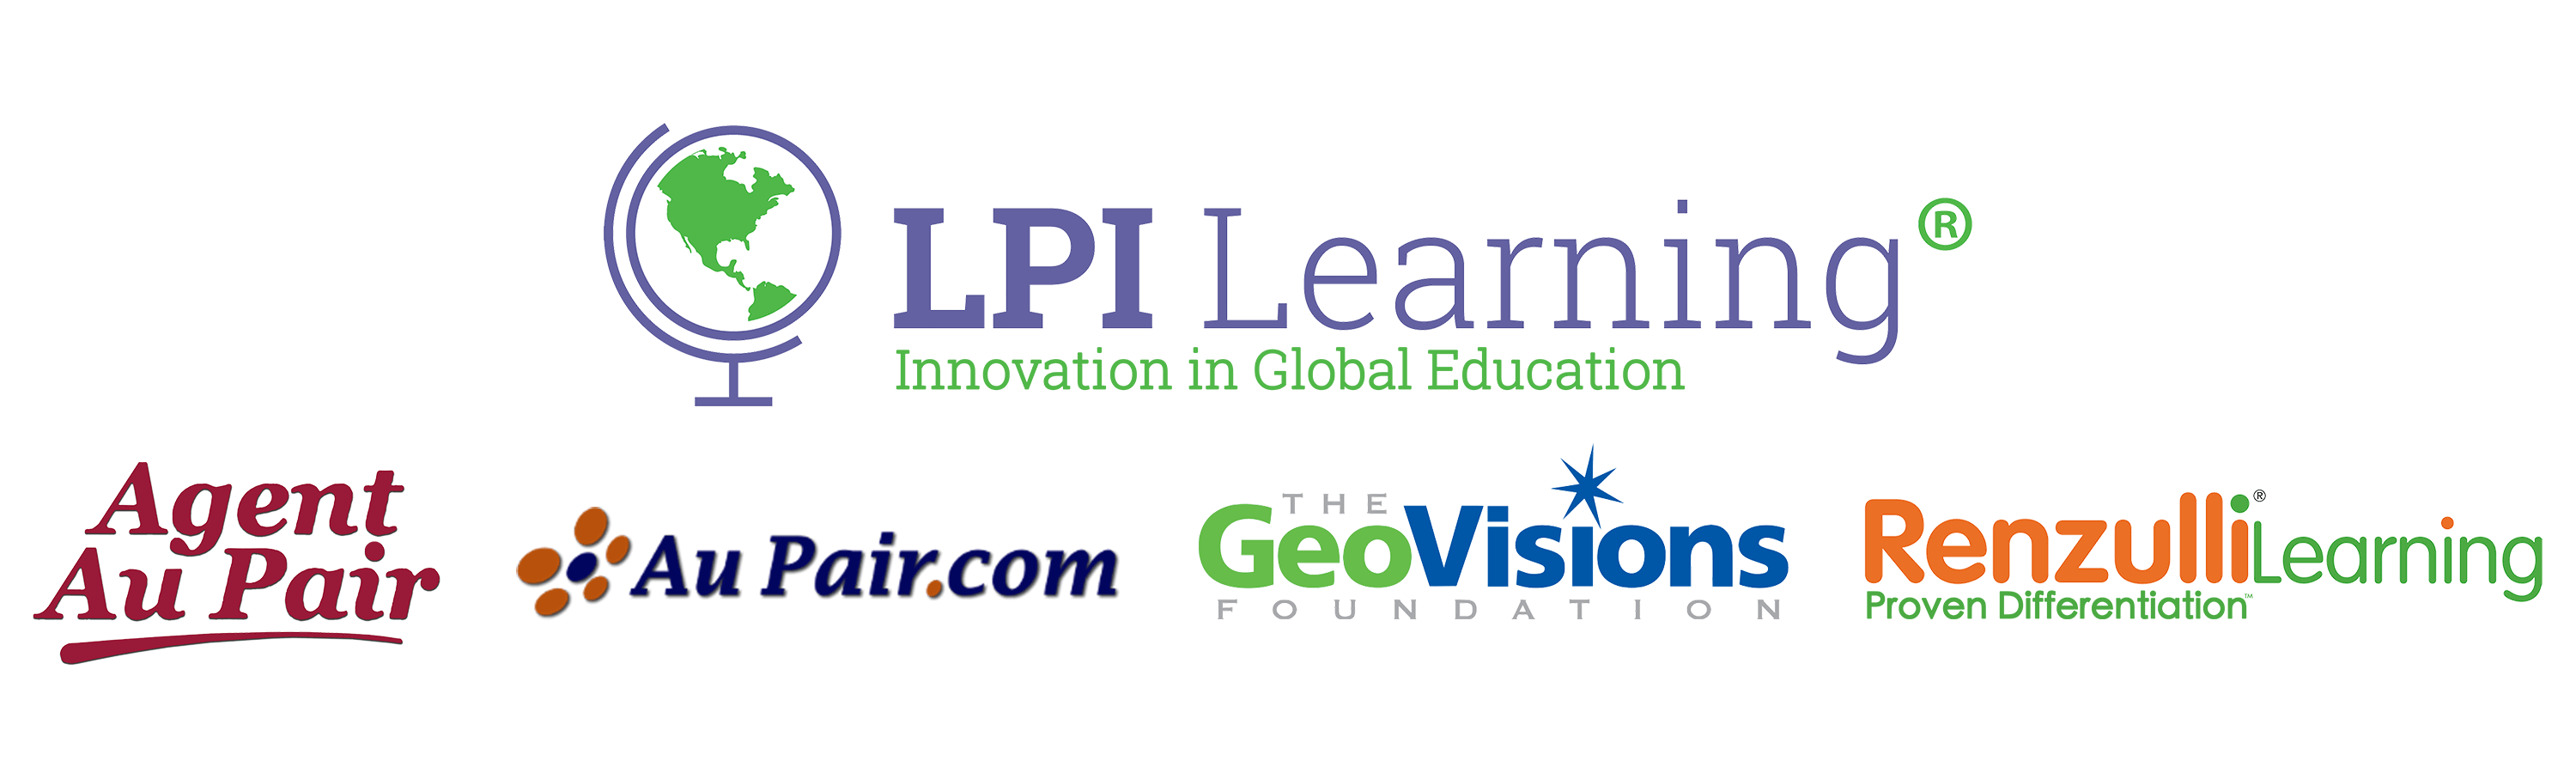 U of Learning Logo - LPI Learning – Innovation in Global Education